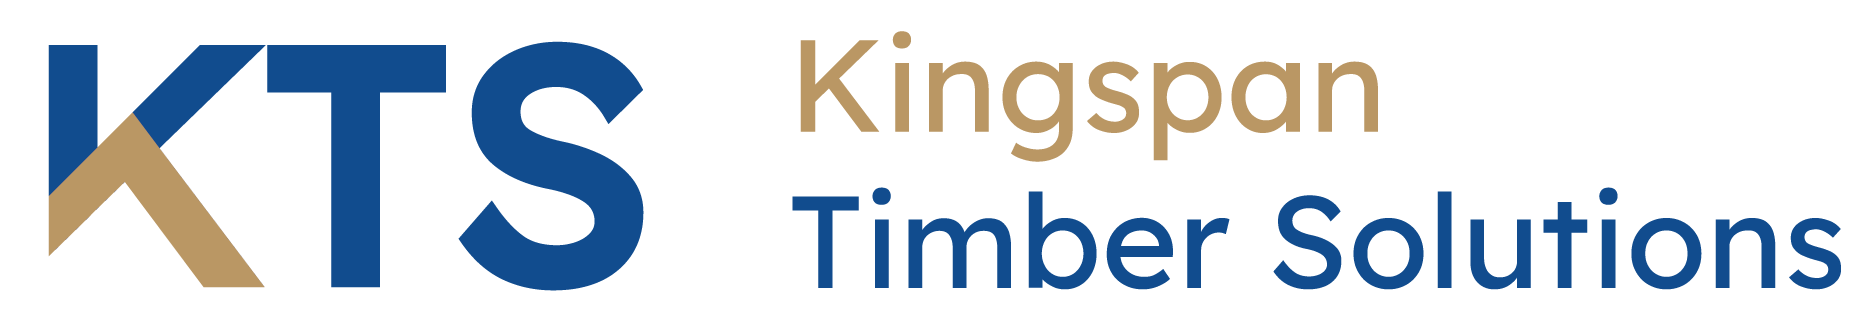 Kingspan Timber Solutions